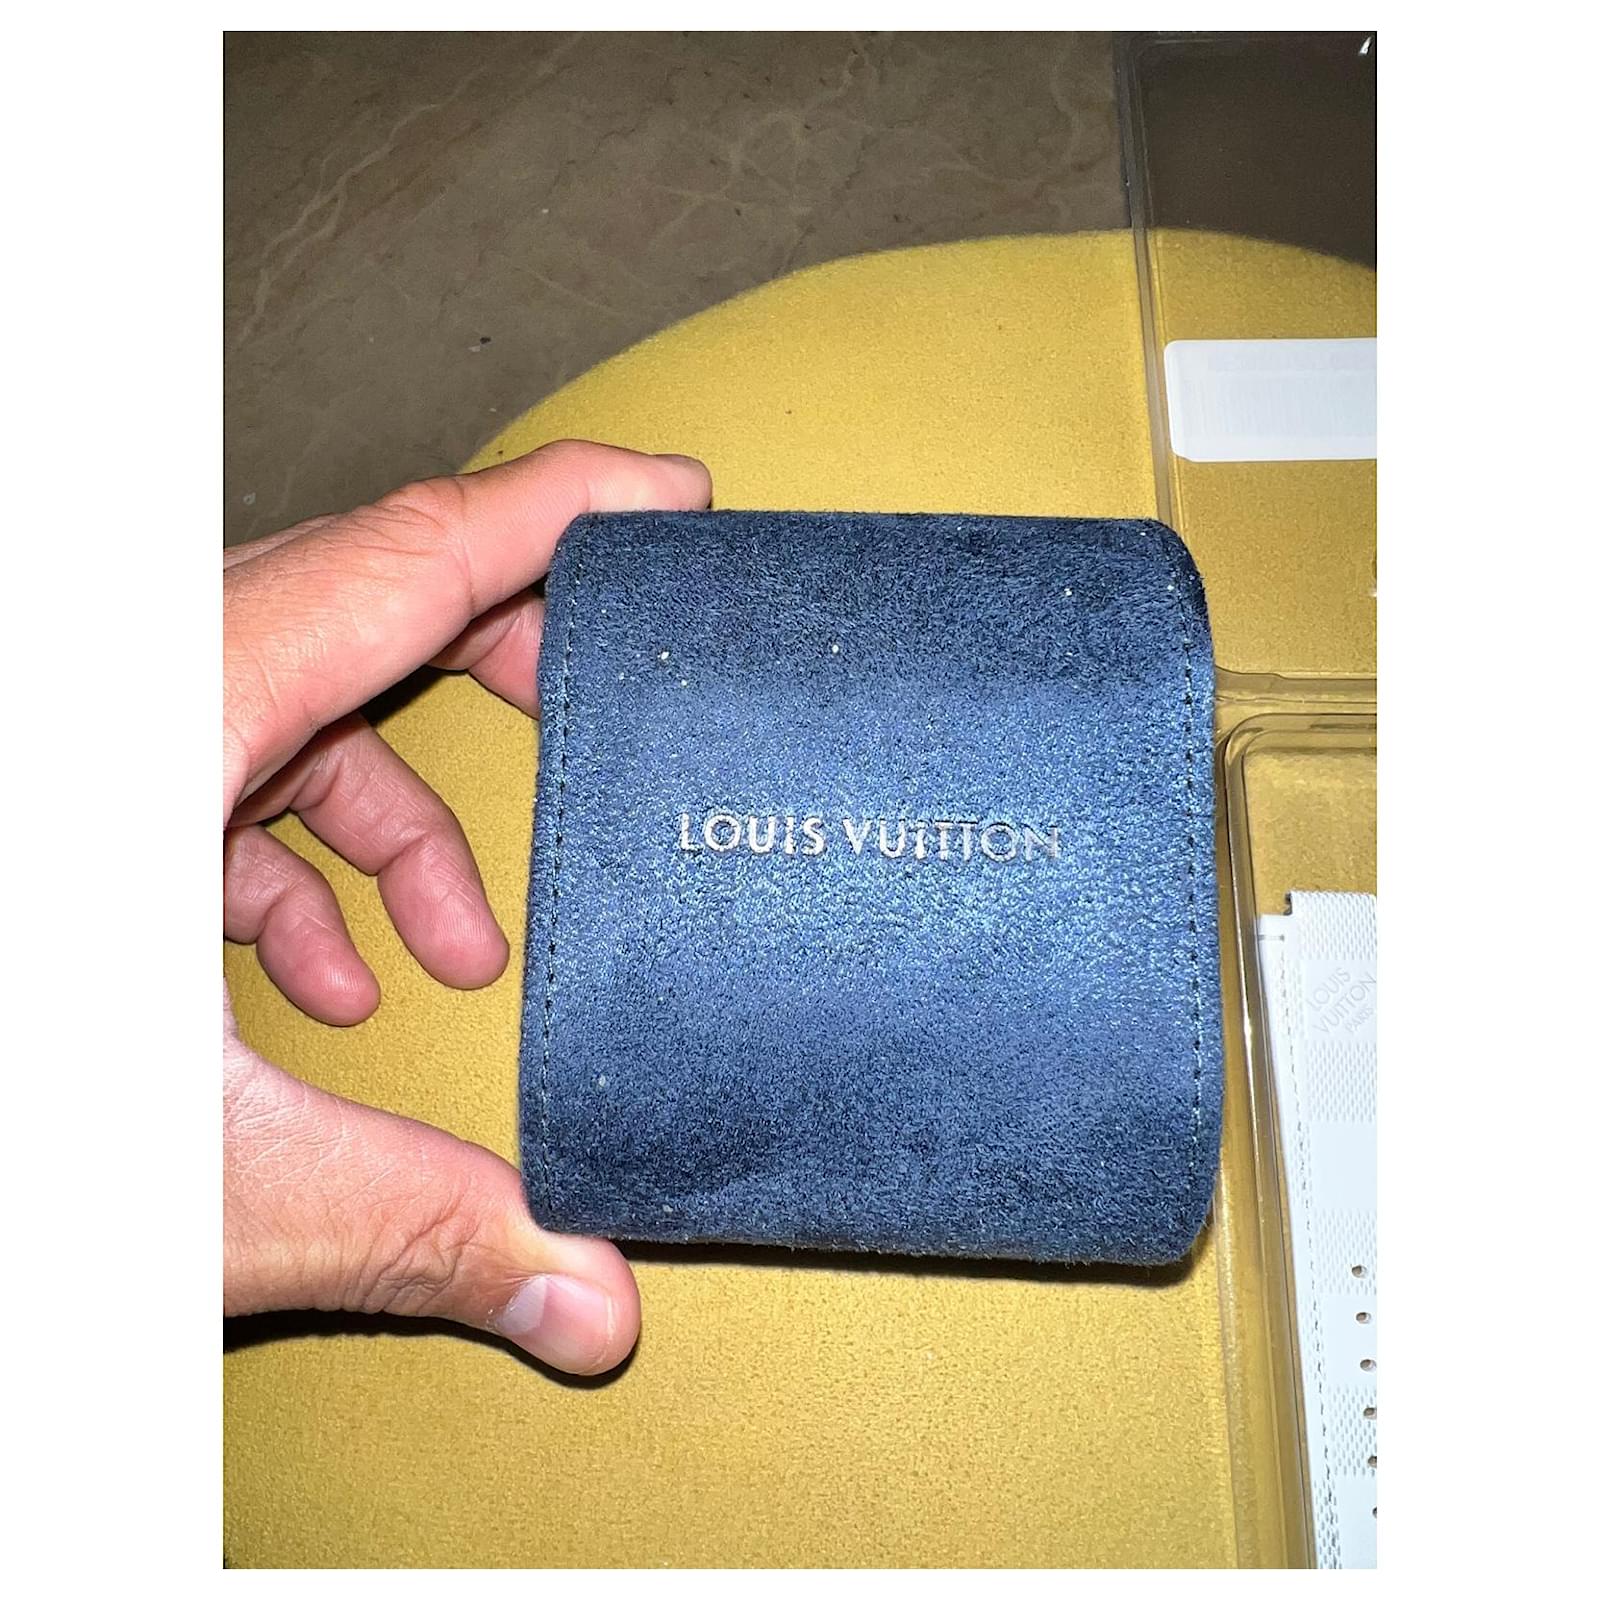 Louis Vuitton Wallet World Tour